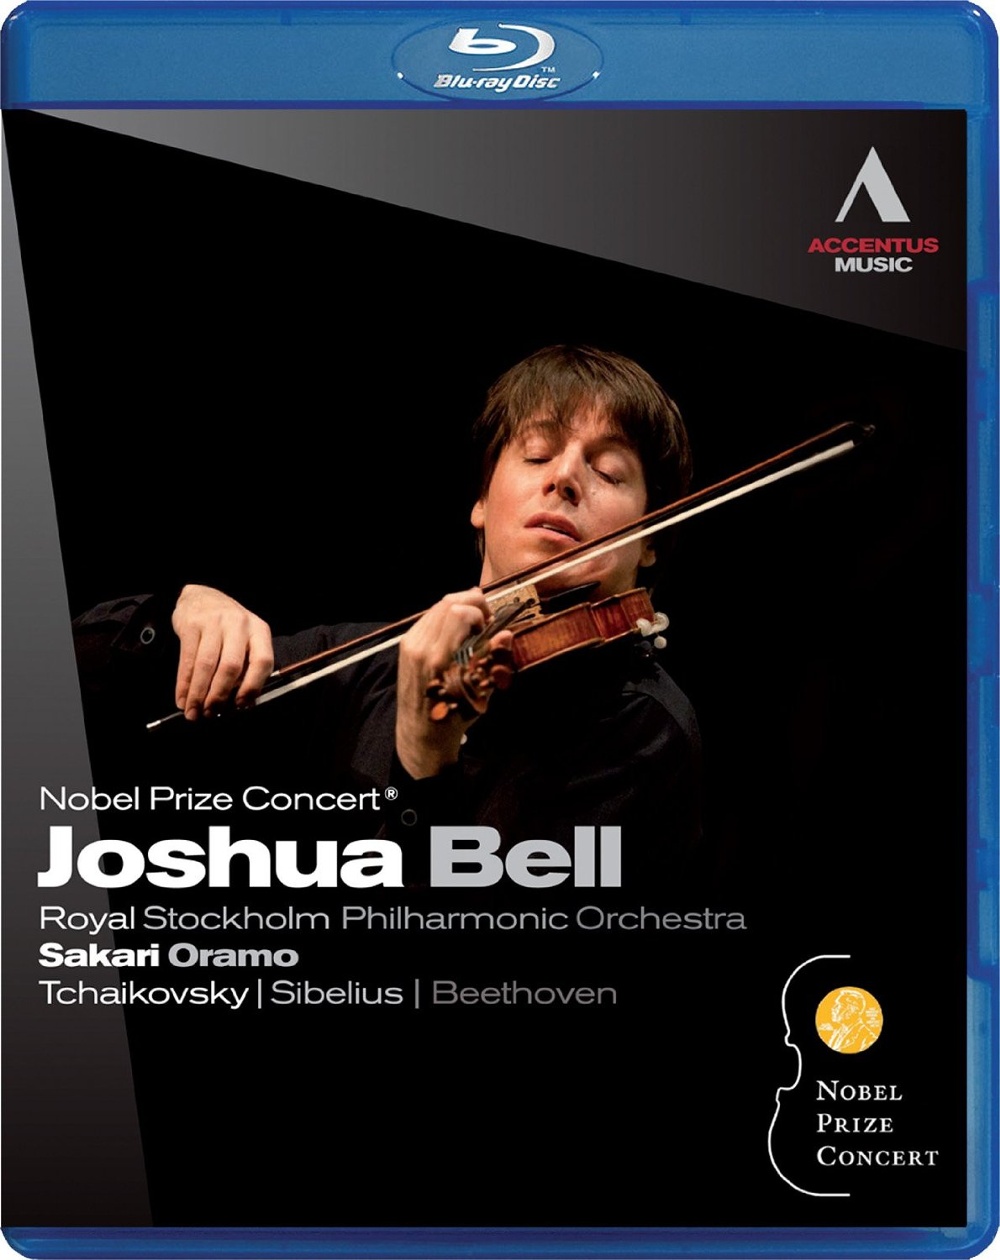 Violin bell. Embertone - Joshua Bell Violin. Audience Josh Bell Concert. Accentus.